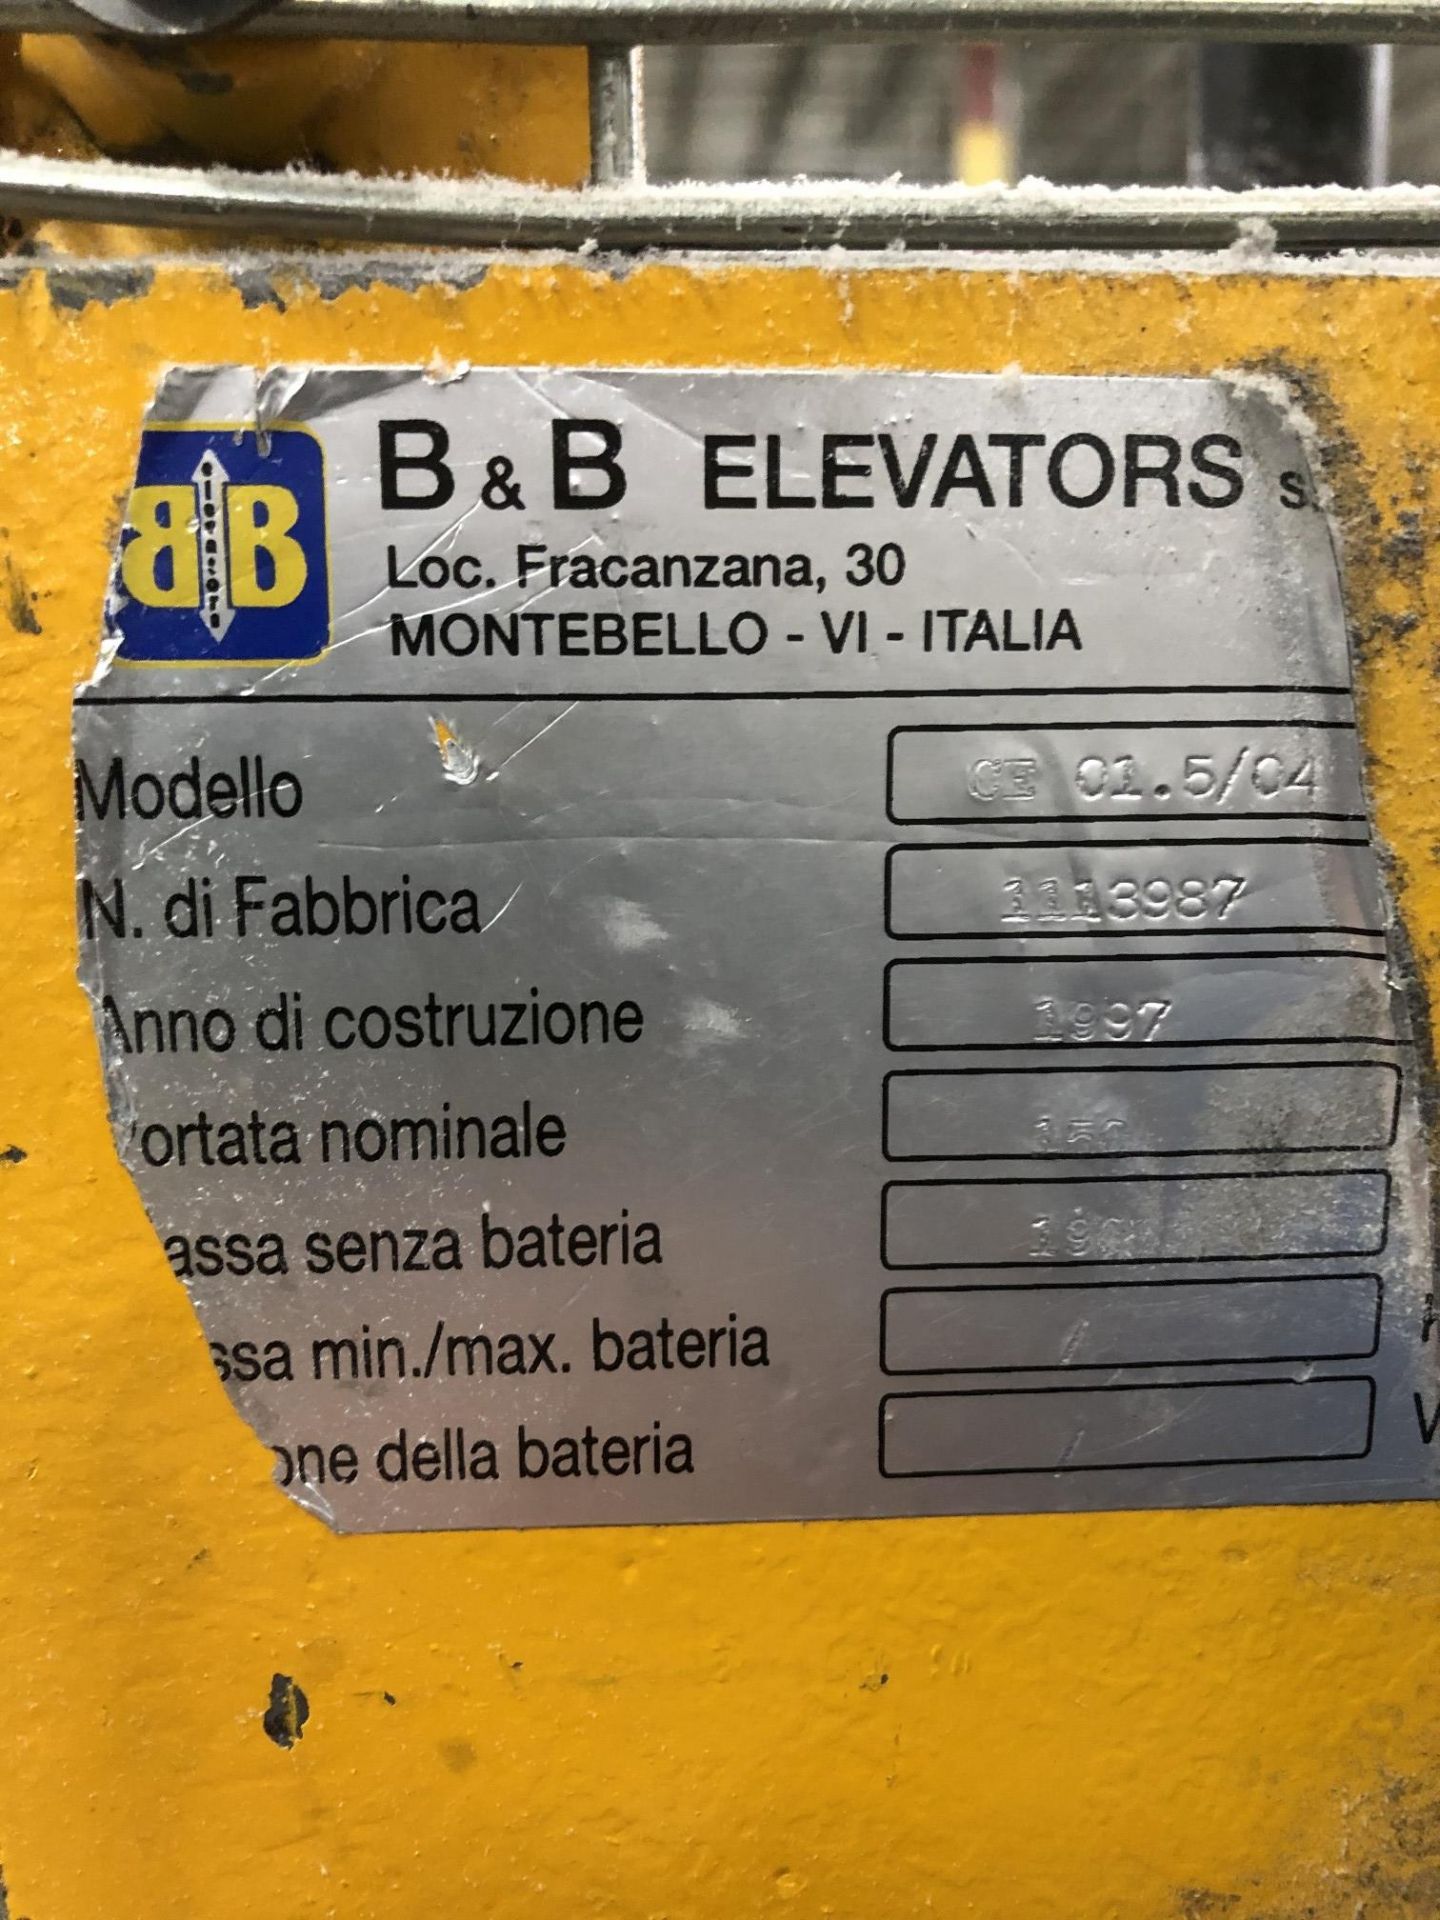 1997 B&B Elevators Chuck Lifter, Model CE 01.5/04, S/N 1113987 - Image 3 of 3